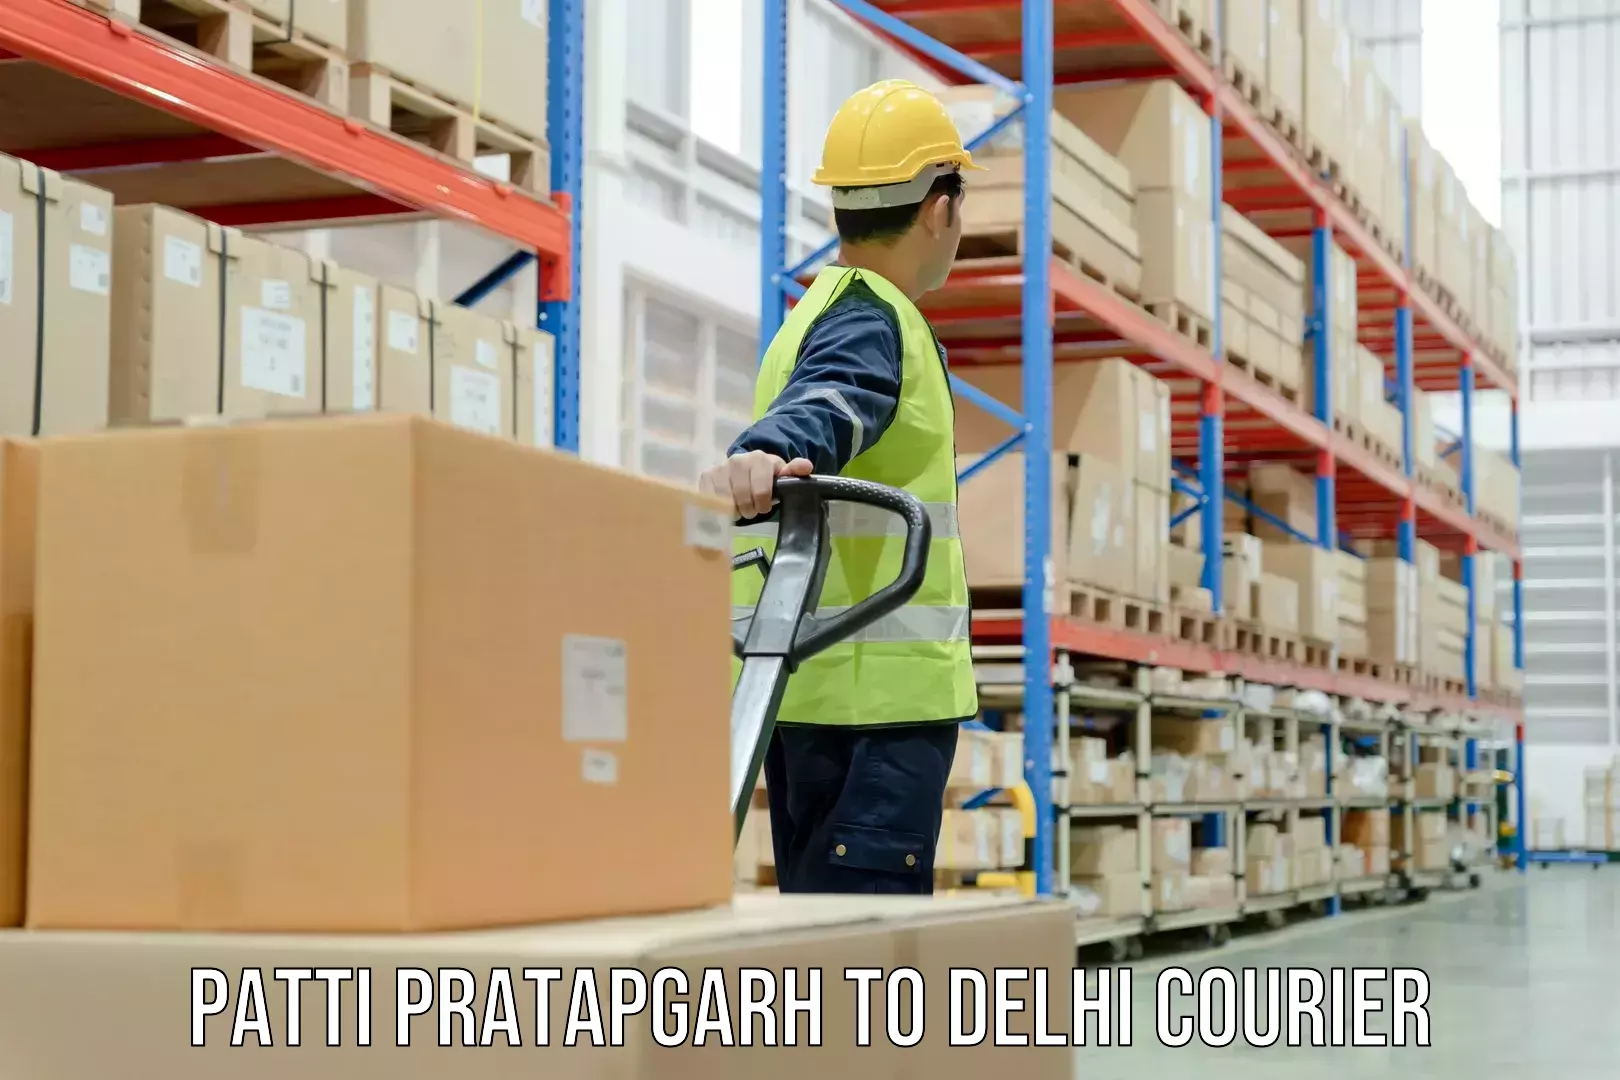 Specialized shipment handling Patti Pratapgarh to NCR